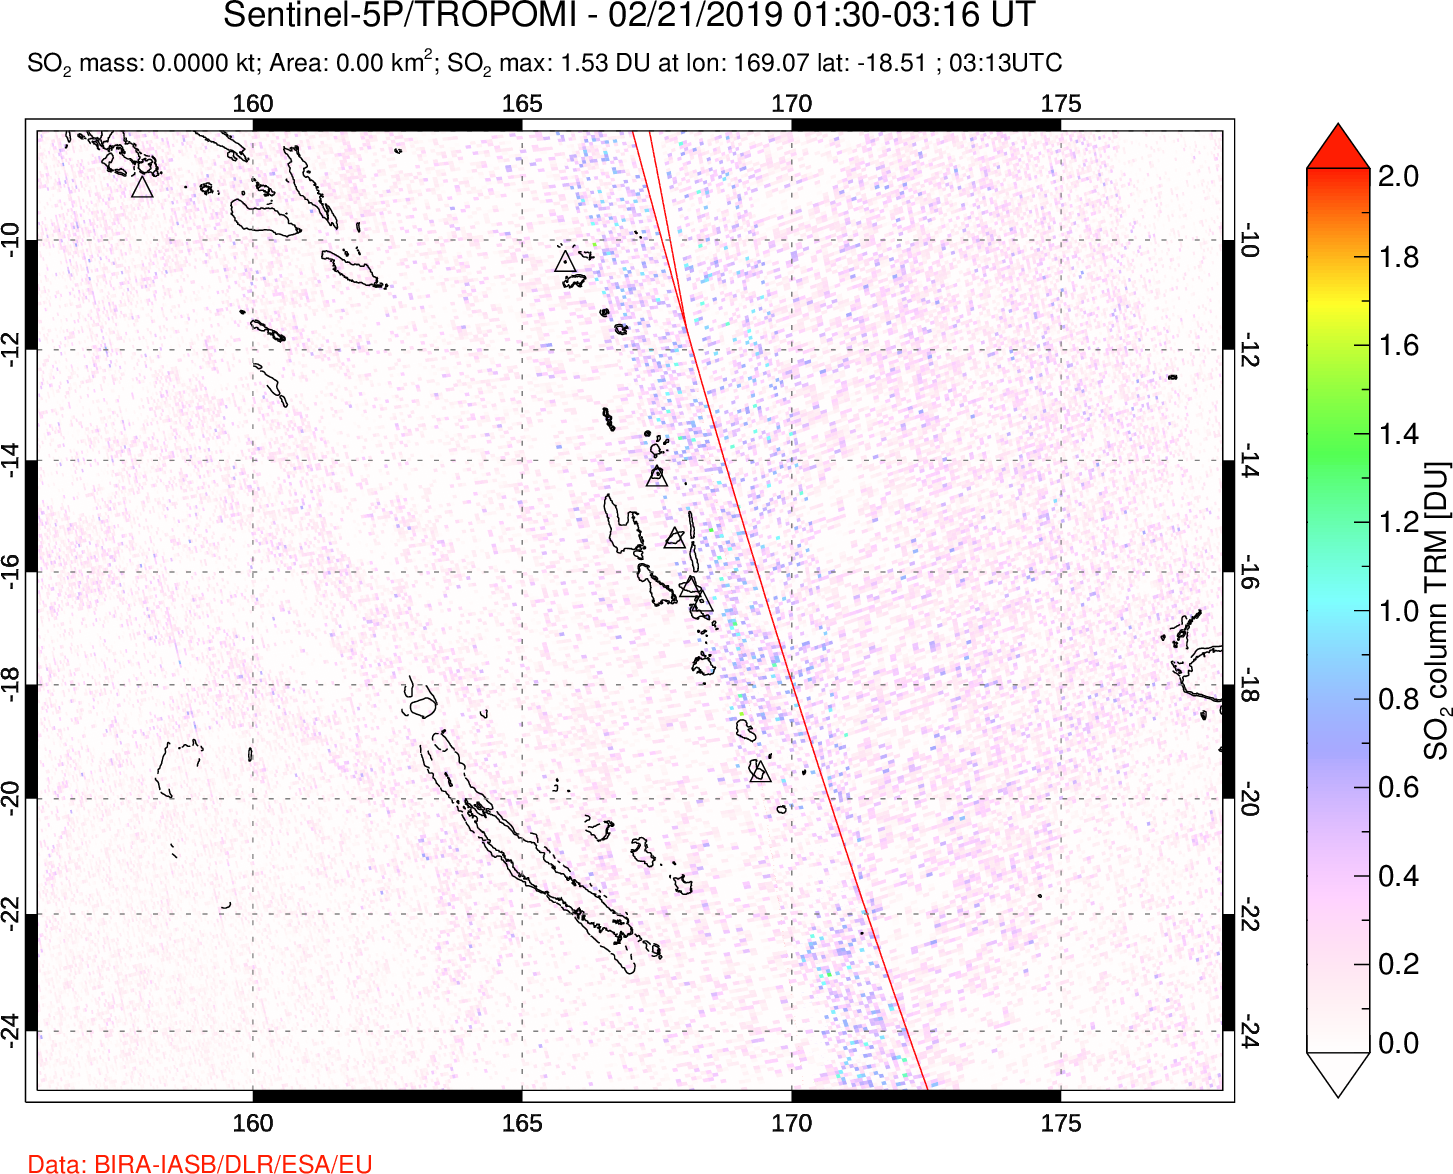 A sulfur dioxide image over Vanuatu, South Pacific on Feb 21, 2019.